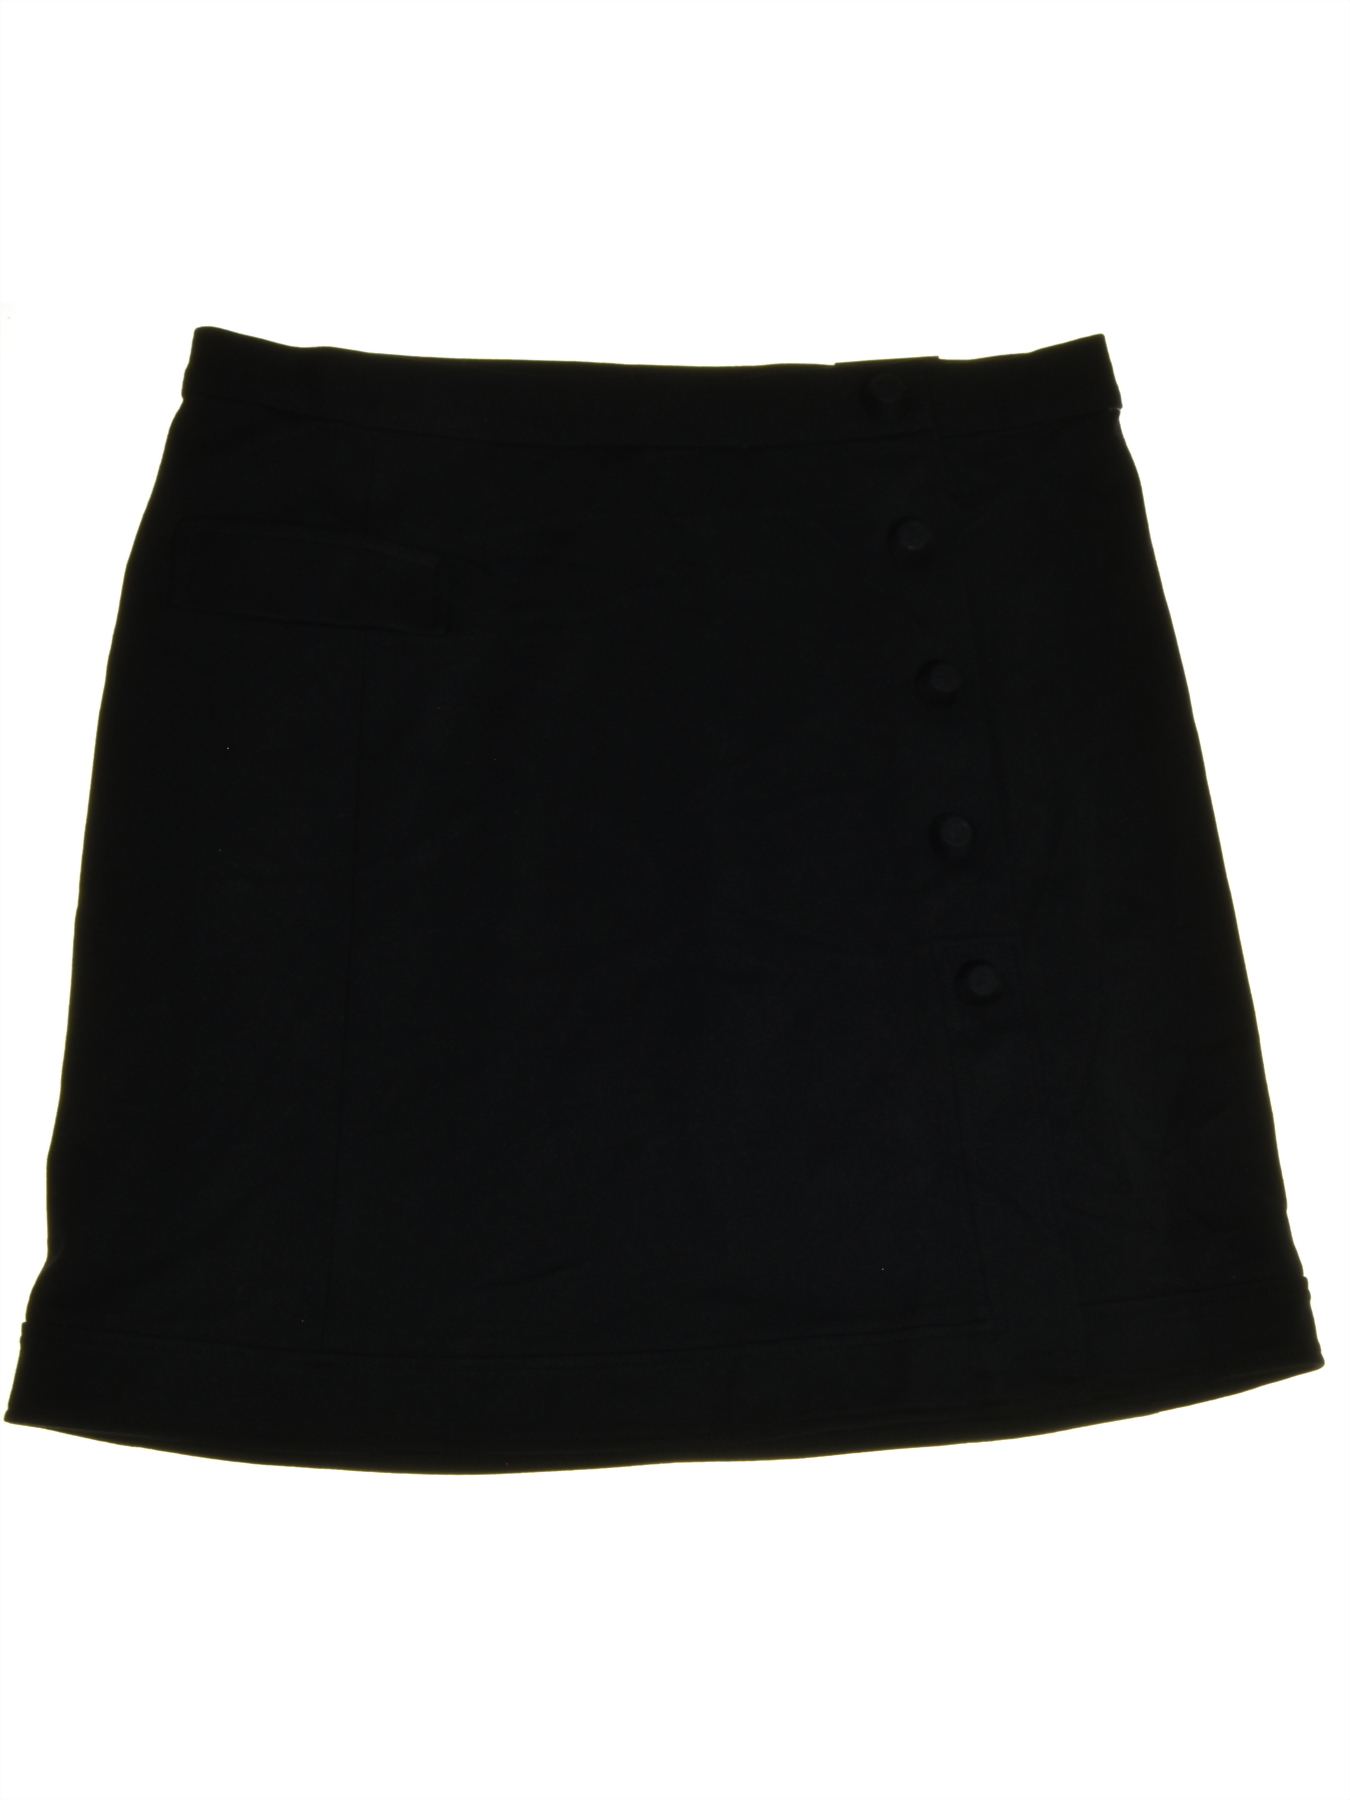 Alfani Women Size 10 Black A-Line Skirt | Canerra